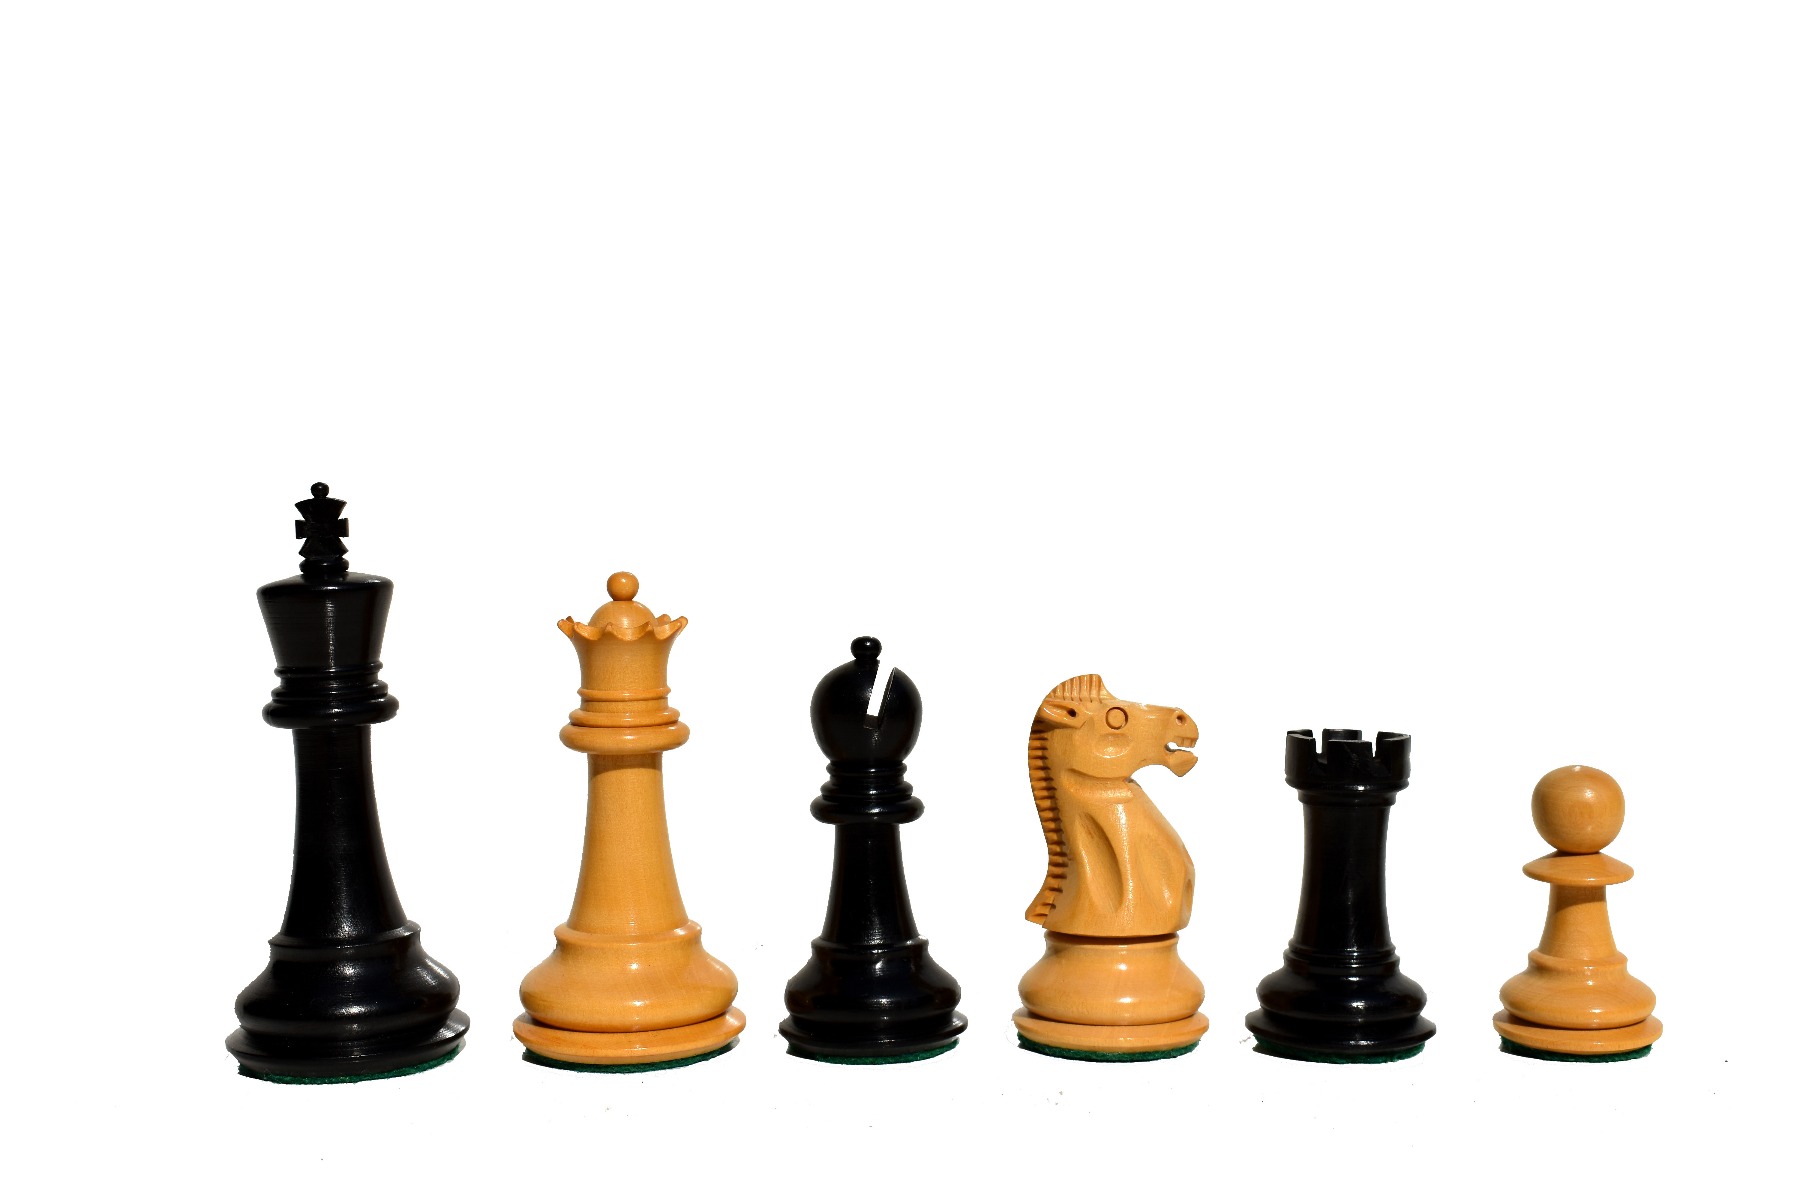 Boris Spassky - Best Of Chess